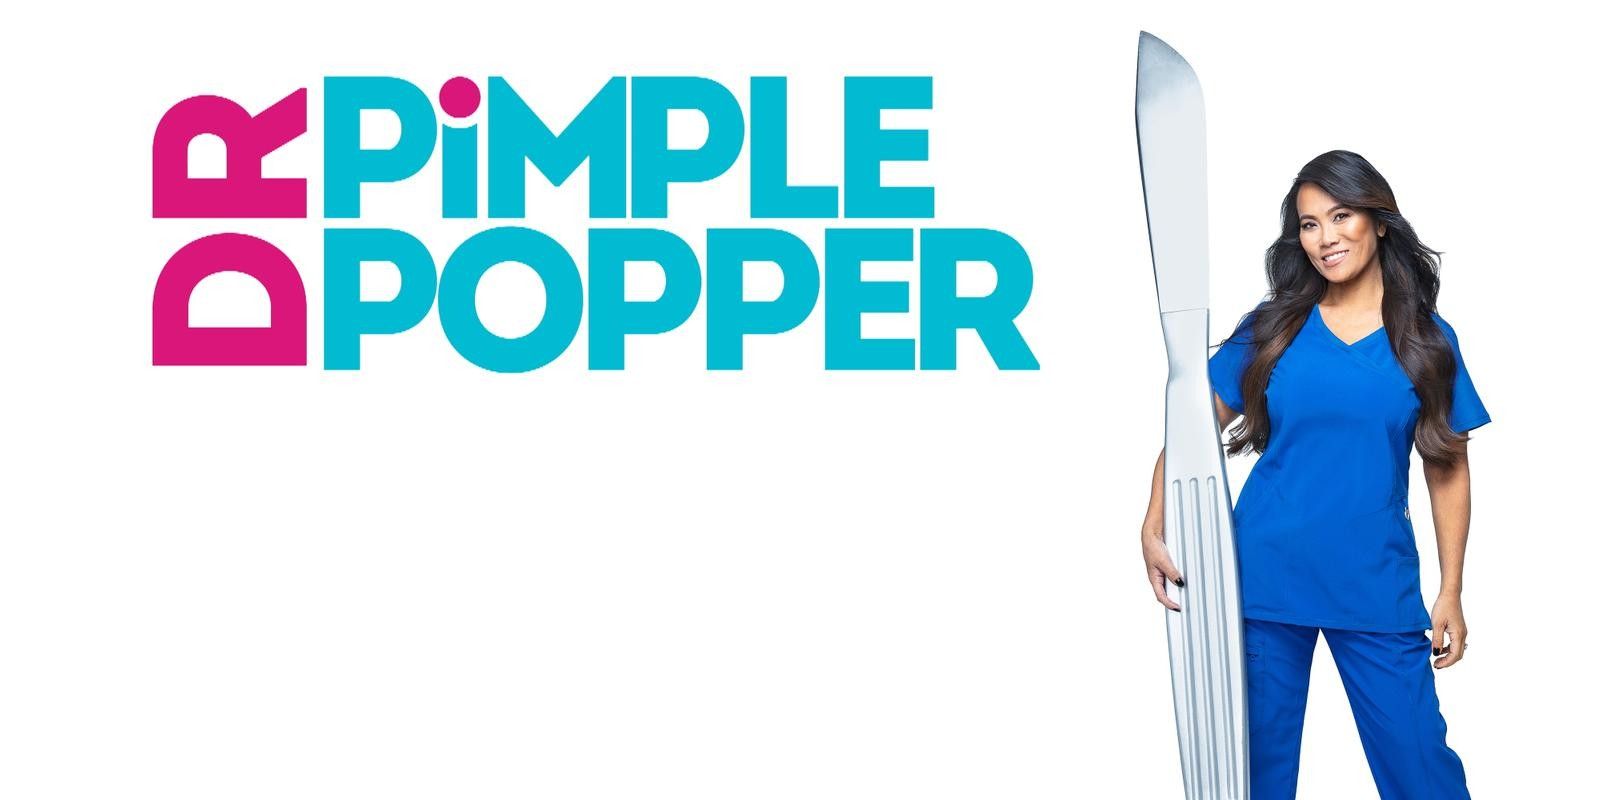 Dr. Pimple Popper promotional image